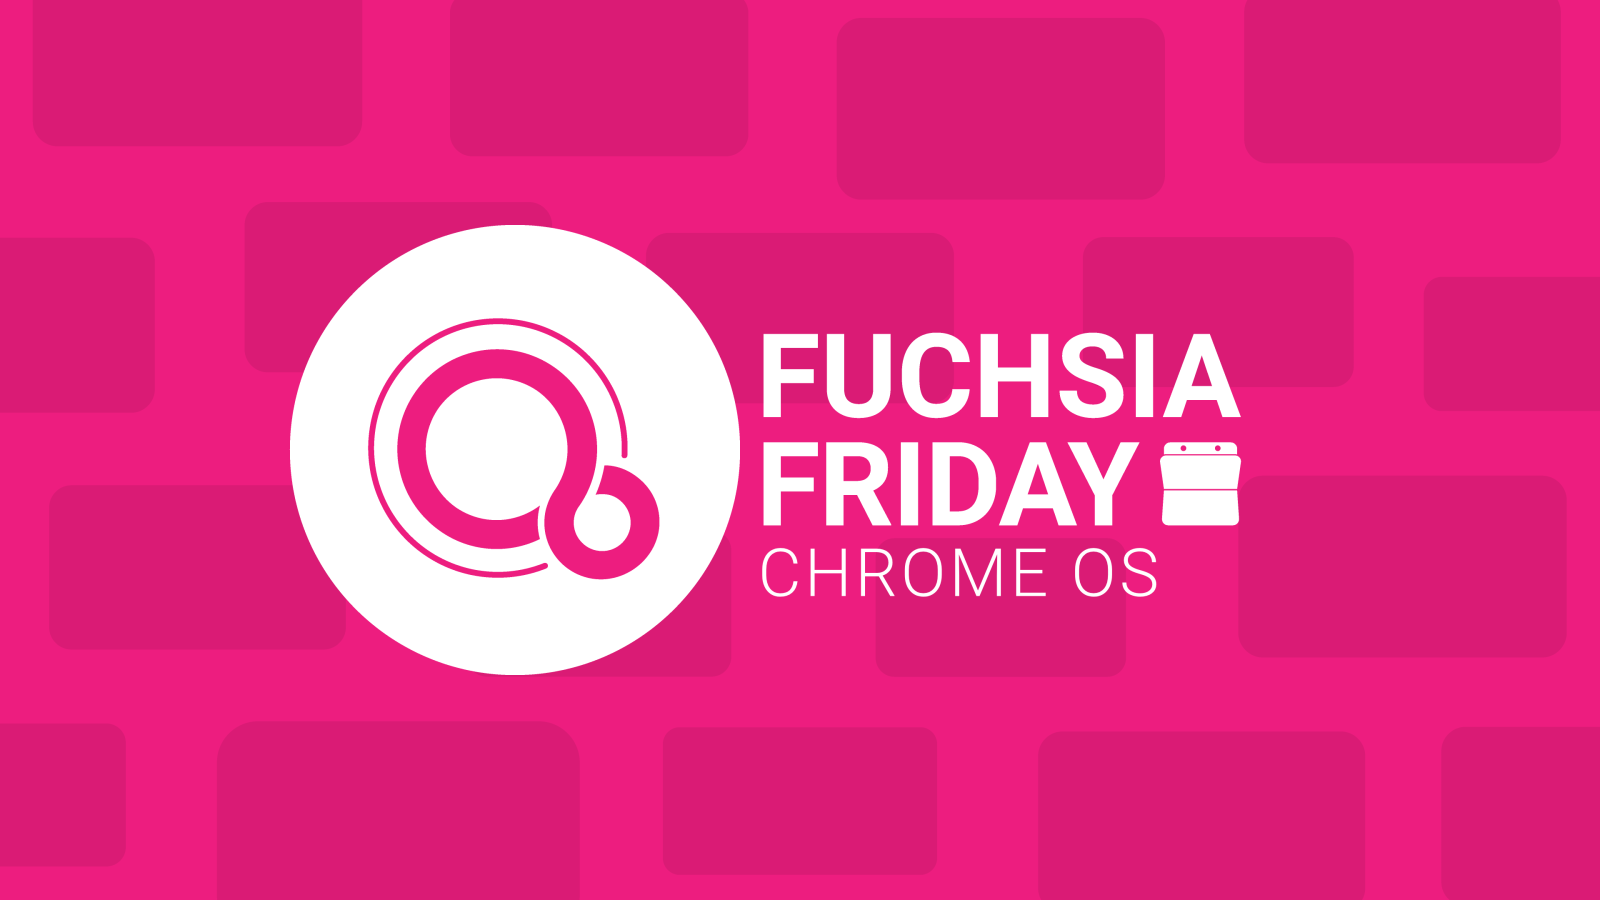 Fuchsia Friday Chrome OS